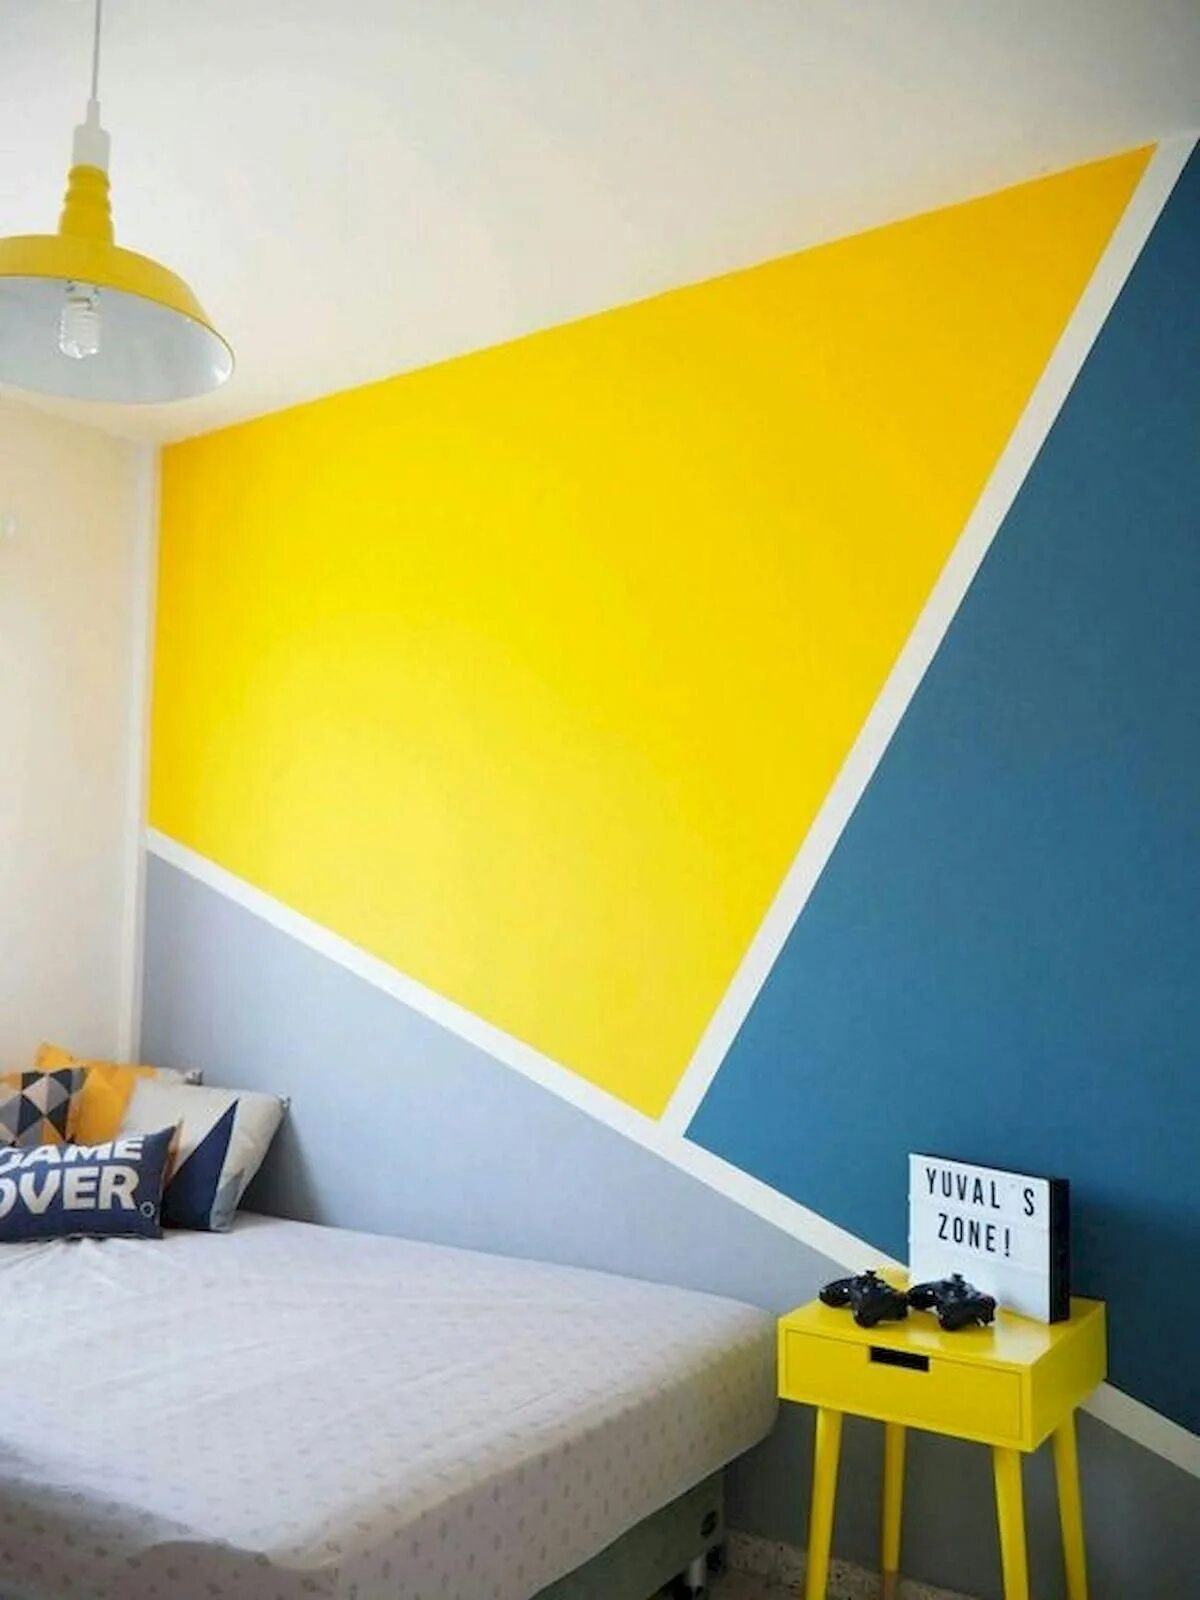 Покраше ая стена. Разноцветные стены. Разноцветные стены в комнате. Покрашенные стены. Разноцветная окраска стен.